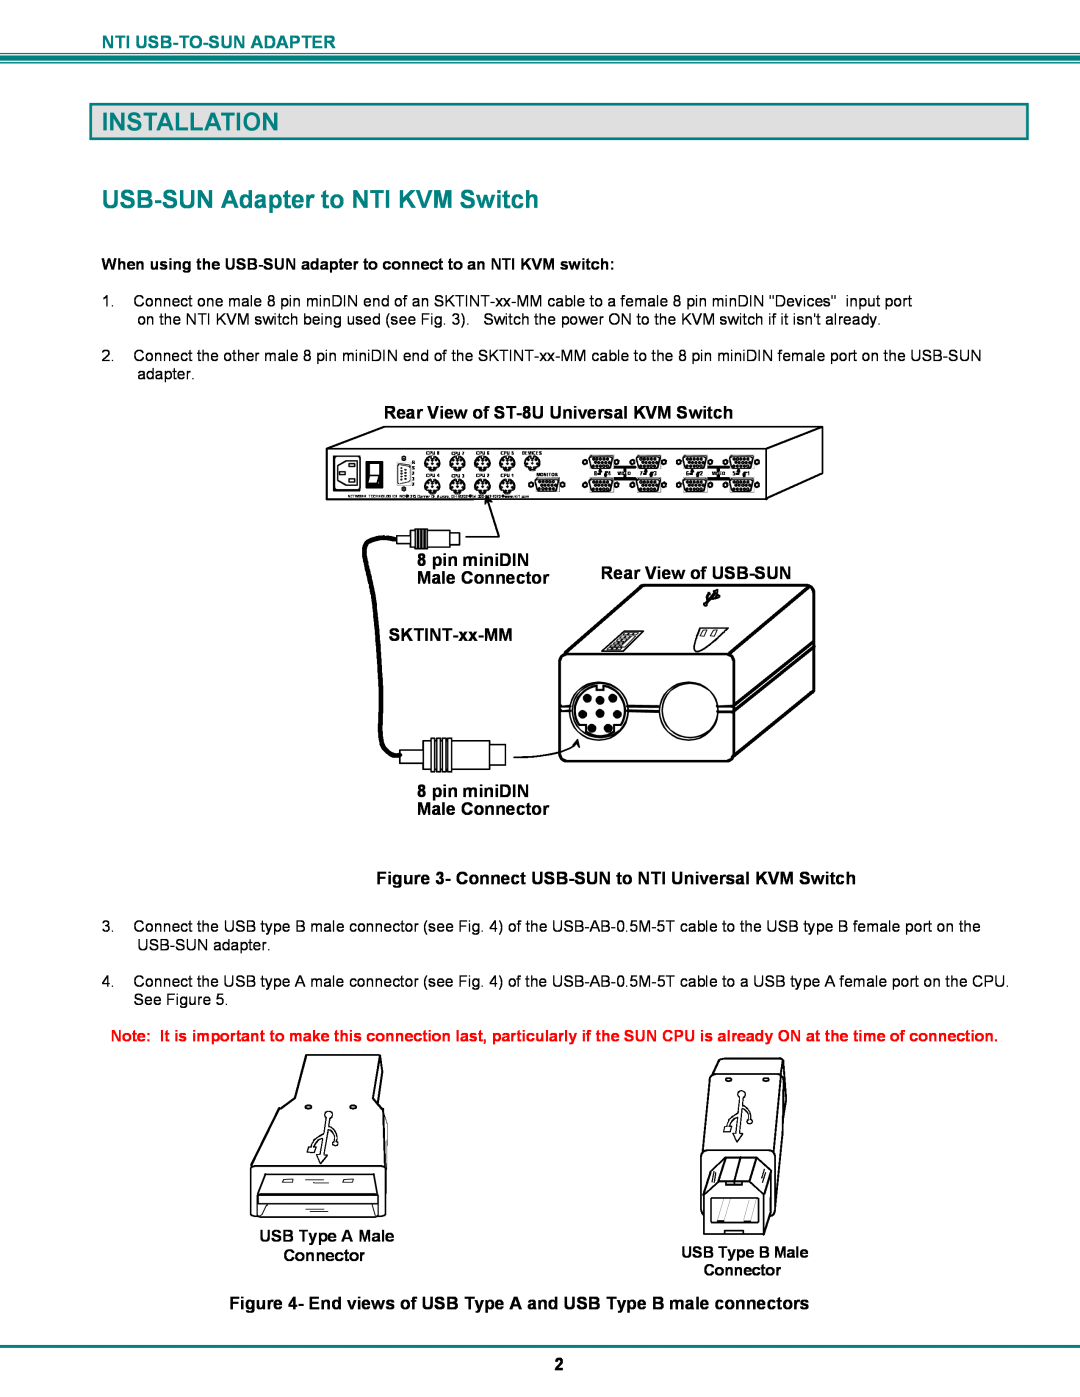 Network Technologies MAN015 INSTALLATION USB-SUN Adapter to NTI KVM Switch, Nti Usb-To-Sun Adapter, pin miniDIN 